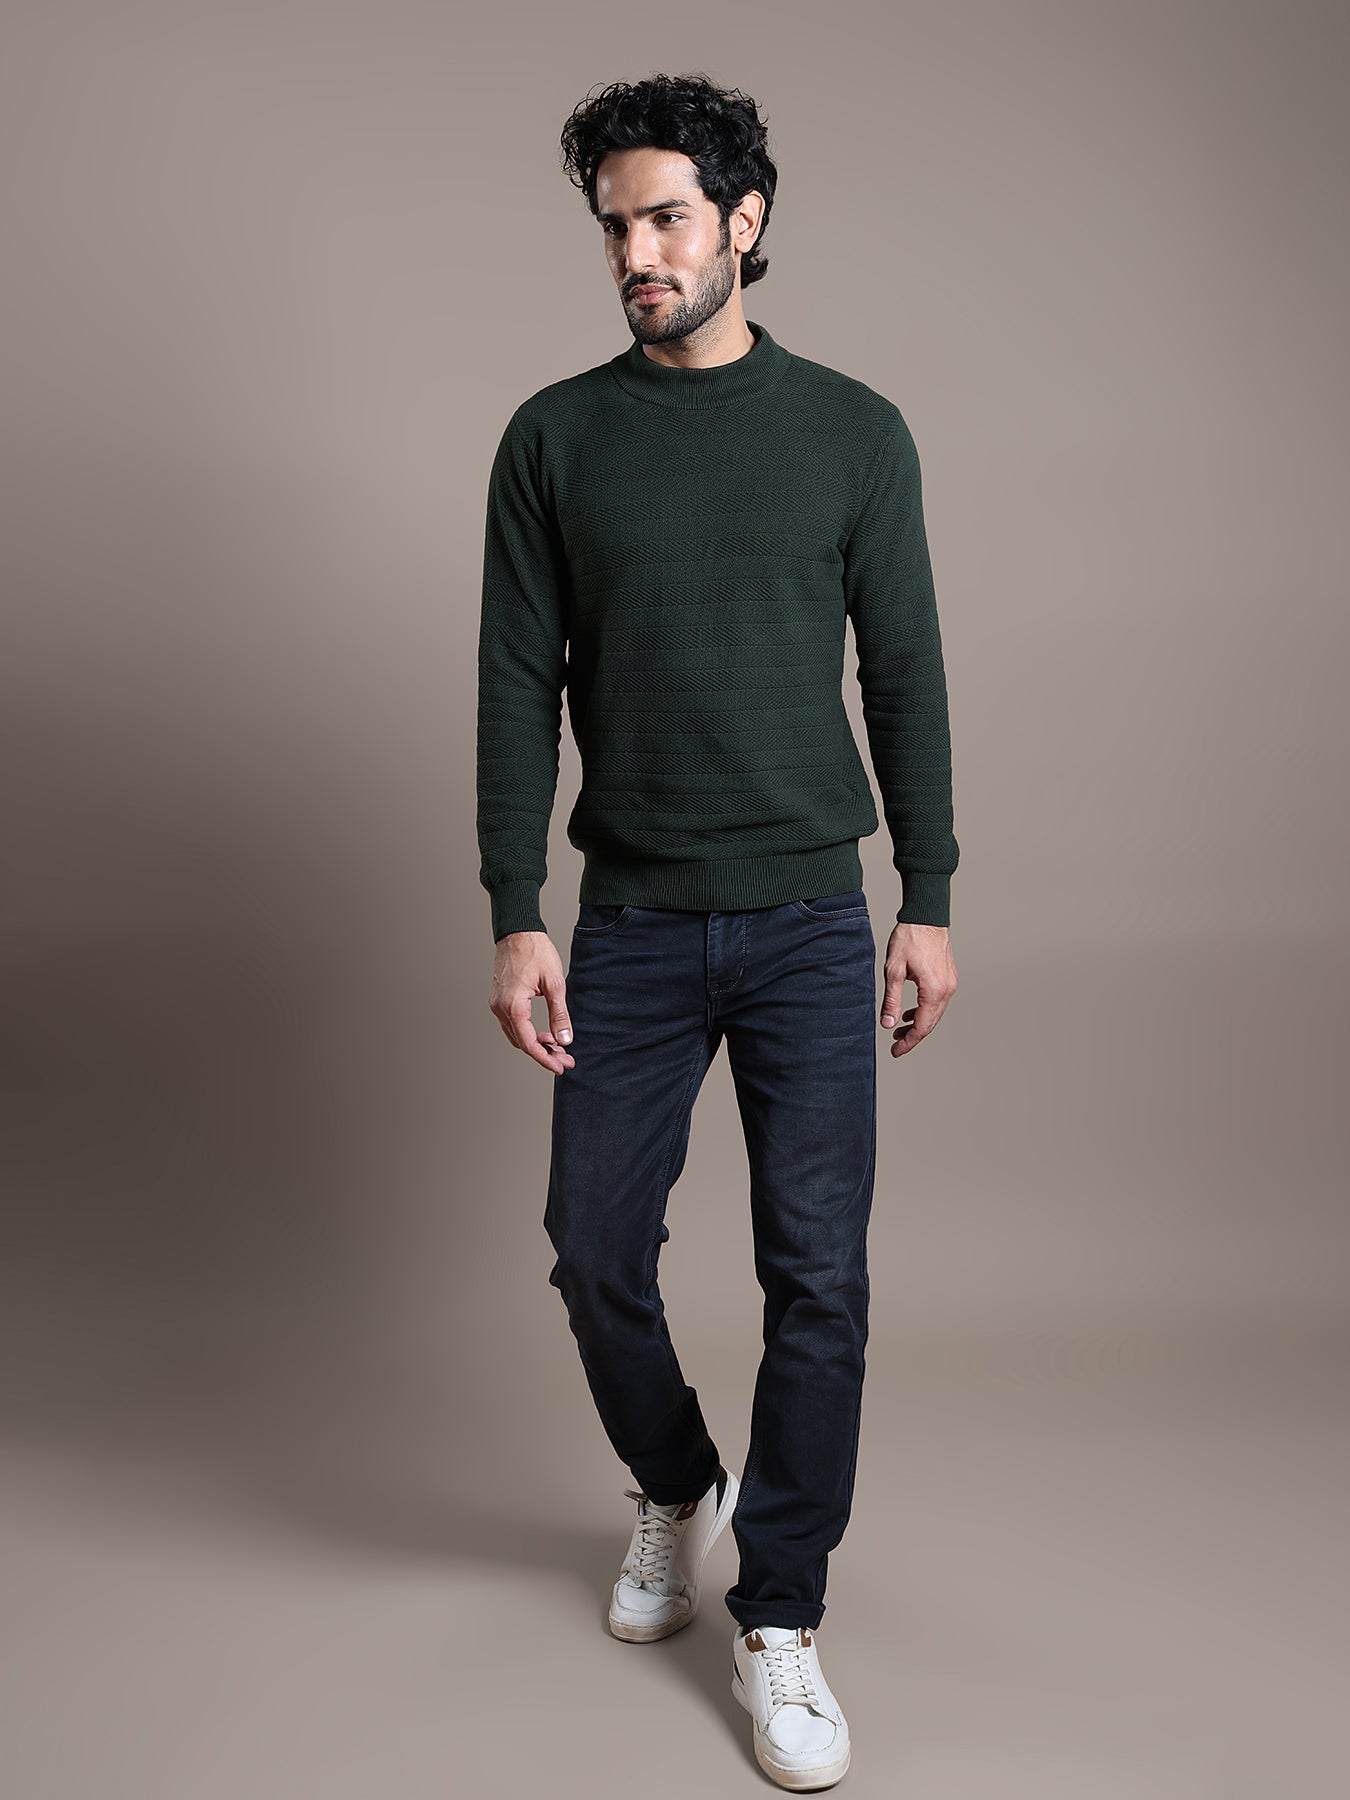 Knitted Dark Green Plain Regular Fit Full Sleeve Casual Pullover